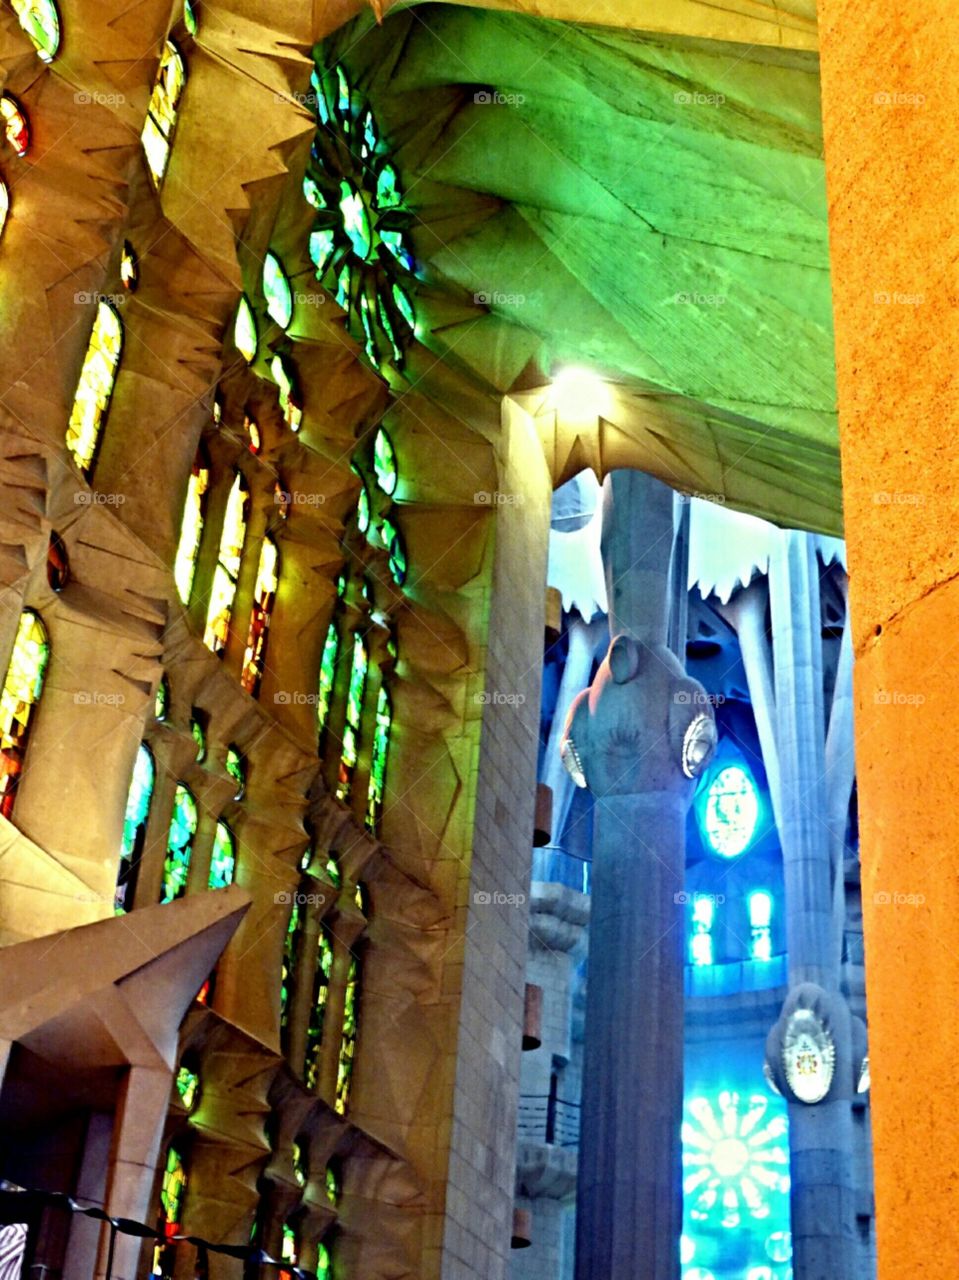 wwSagrada Familia Basilica. Interior pillars natural light